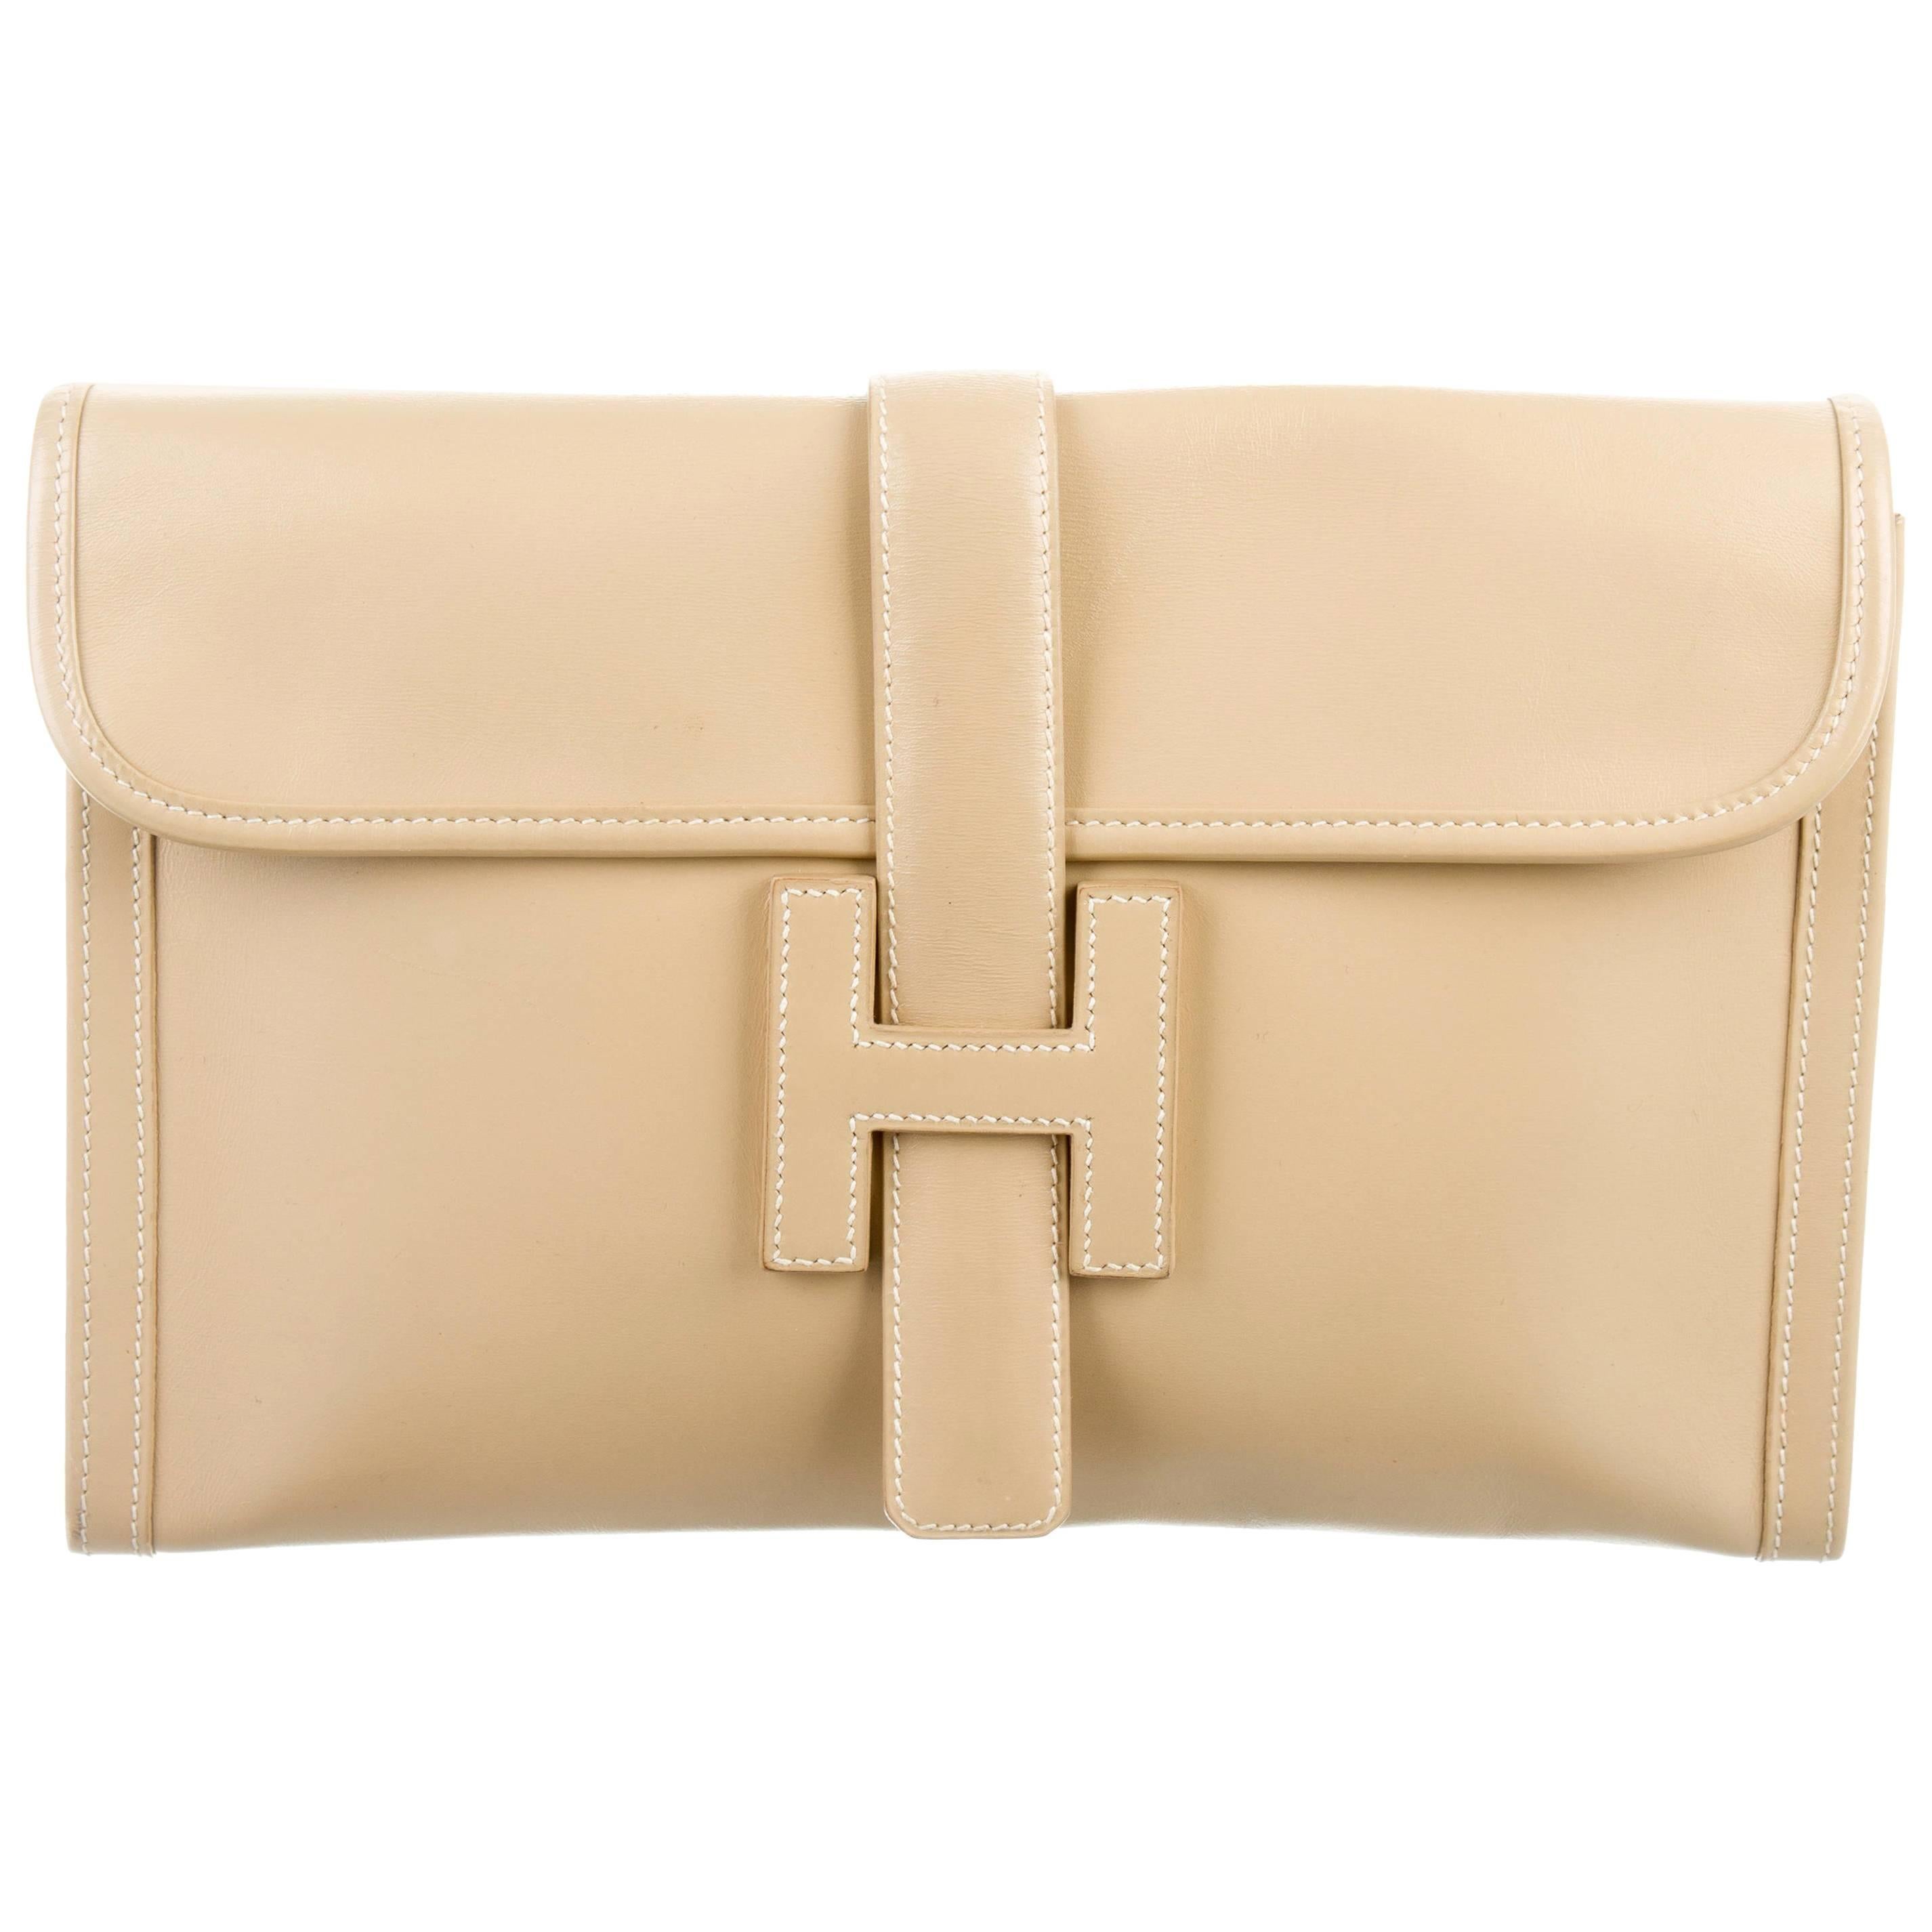 Hermes Leather Ivory Nude Leather H Logo Large Envelope Evening Clutch Flap Bag